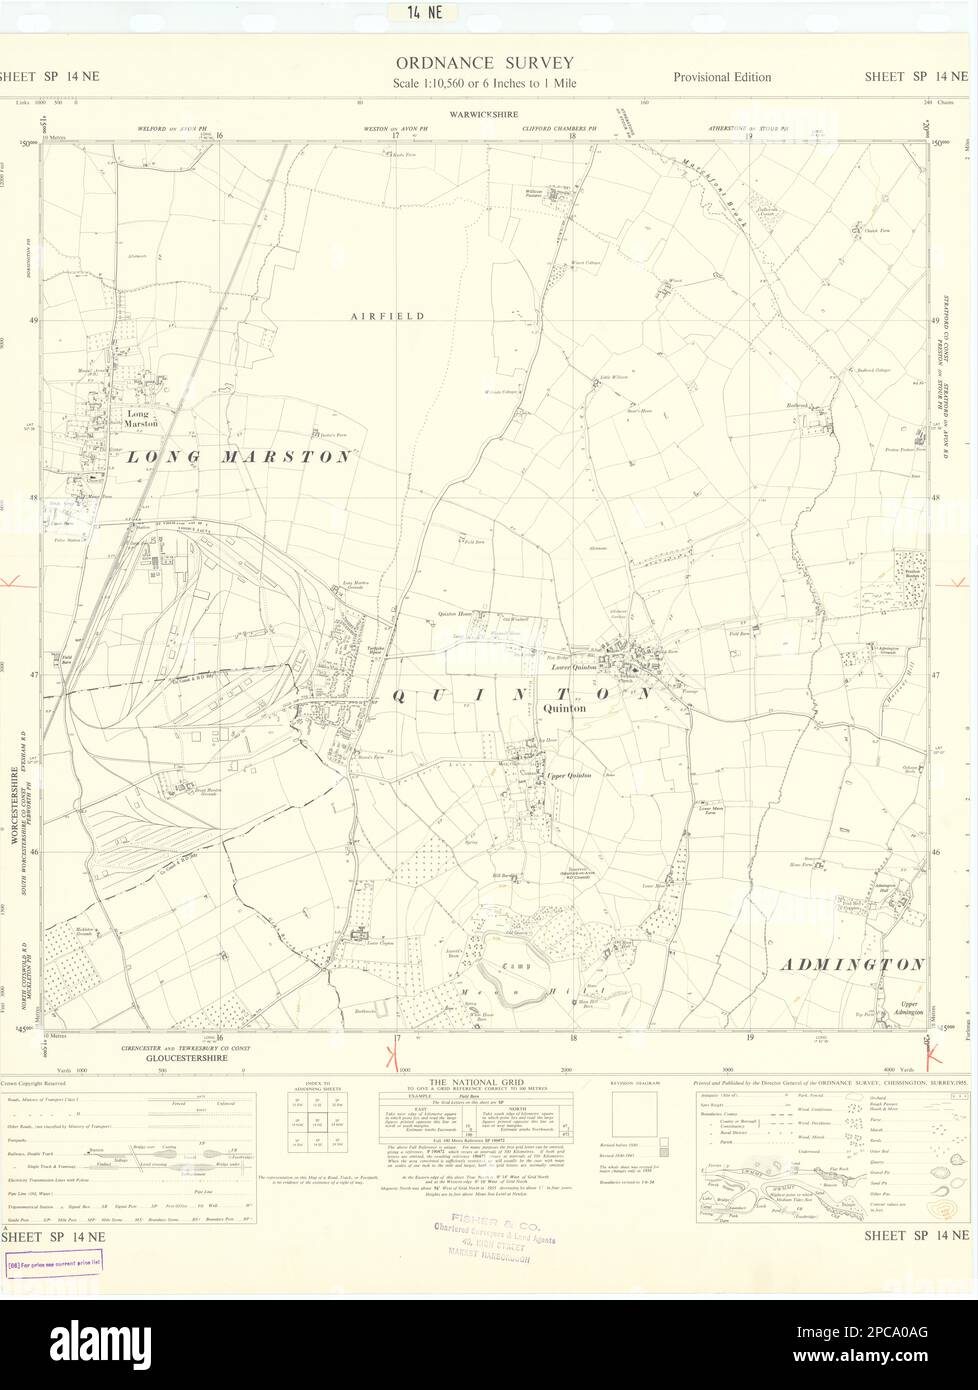 Ordnance Survey Sheet SP14NE Warwickshire Quinton Long Marston 1955 mapa antiguo Foto de stock